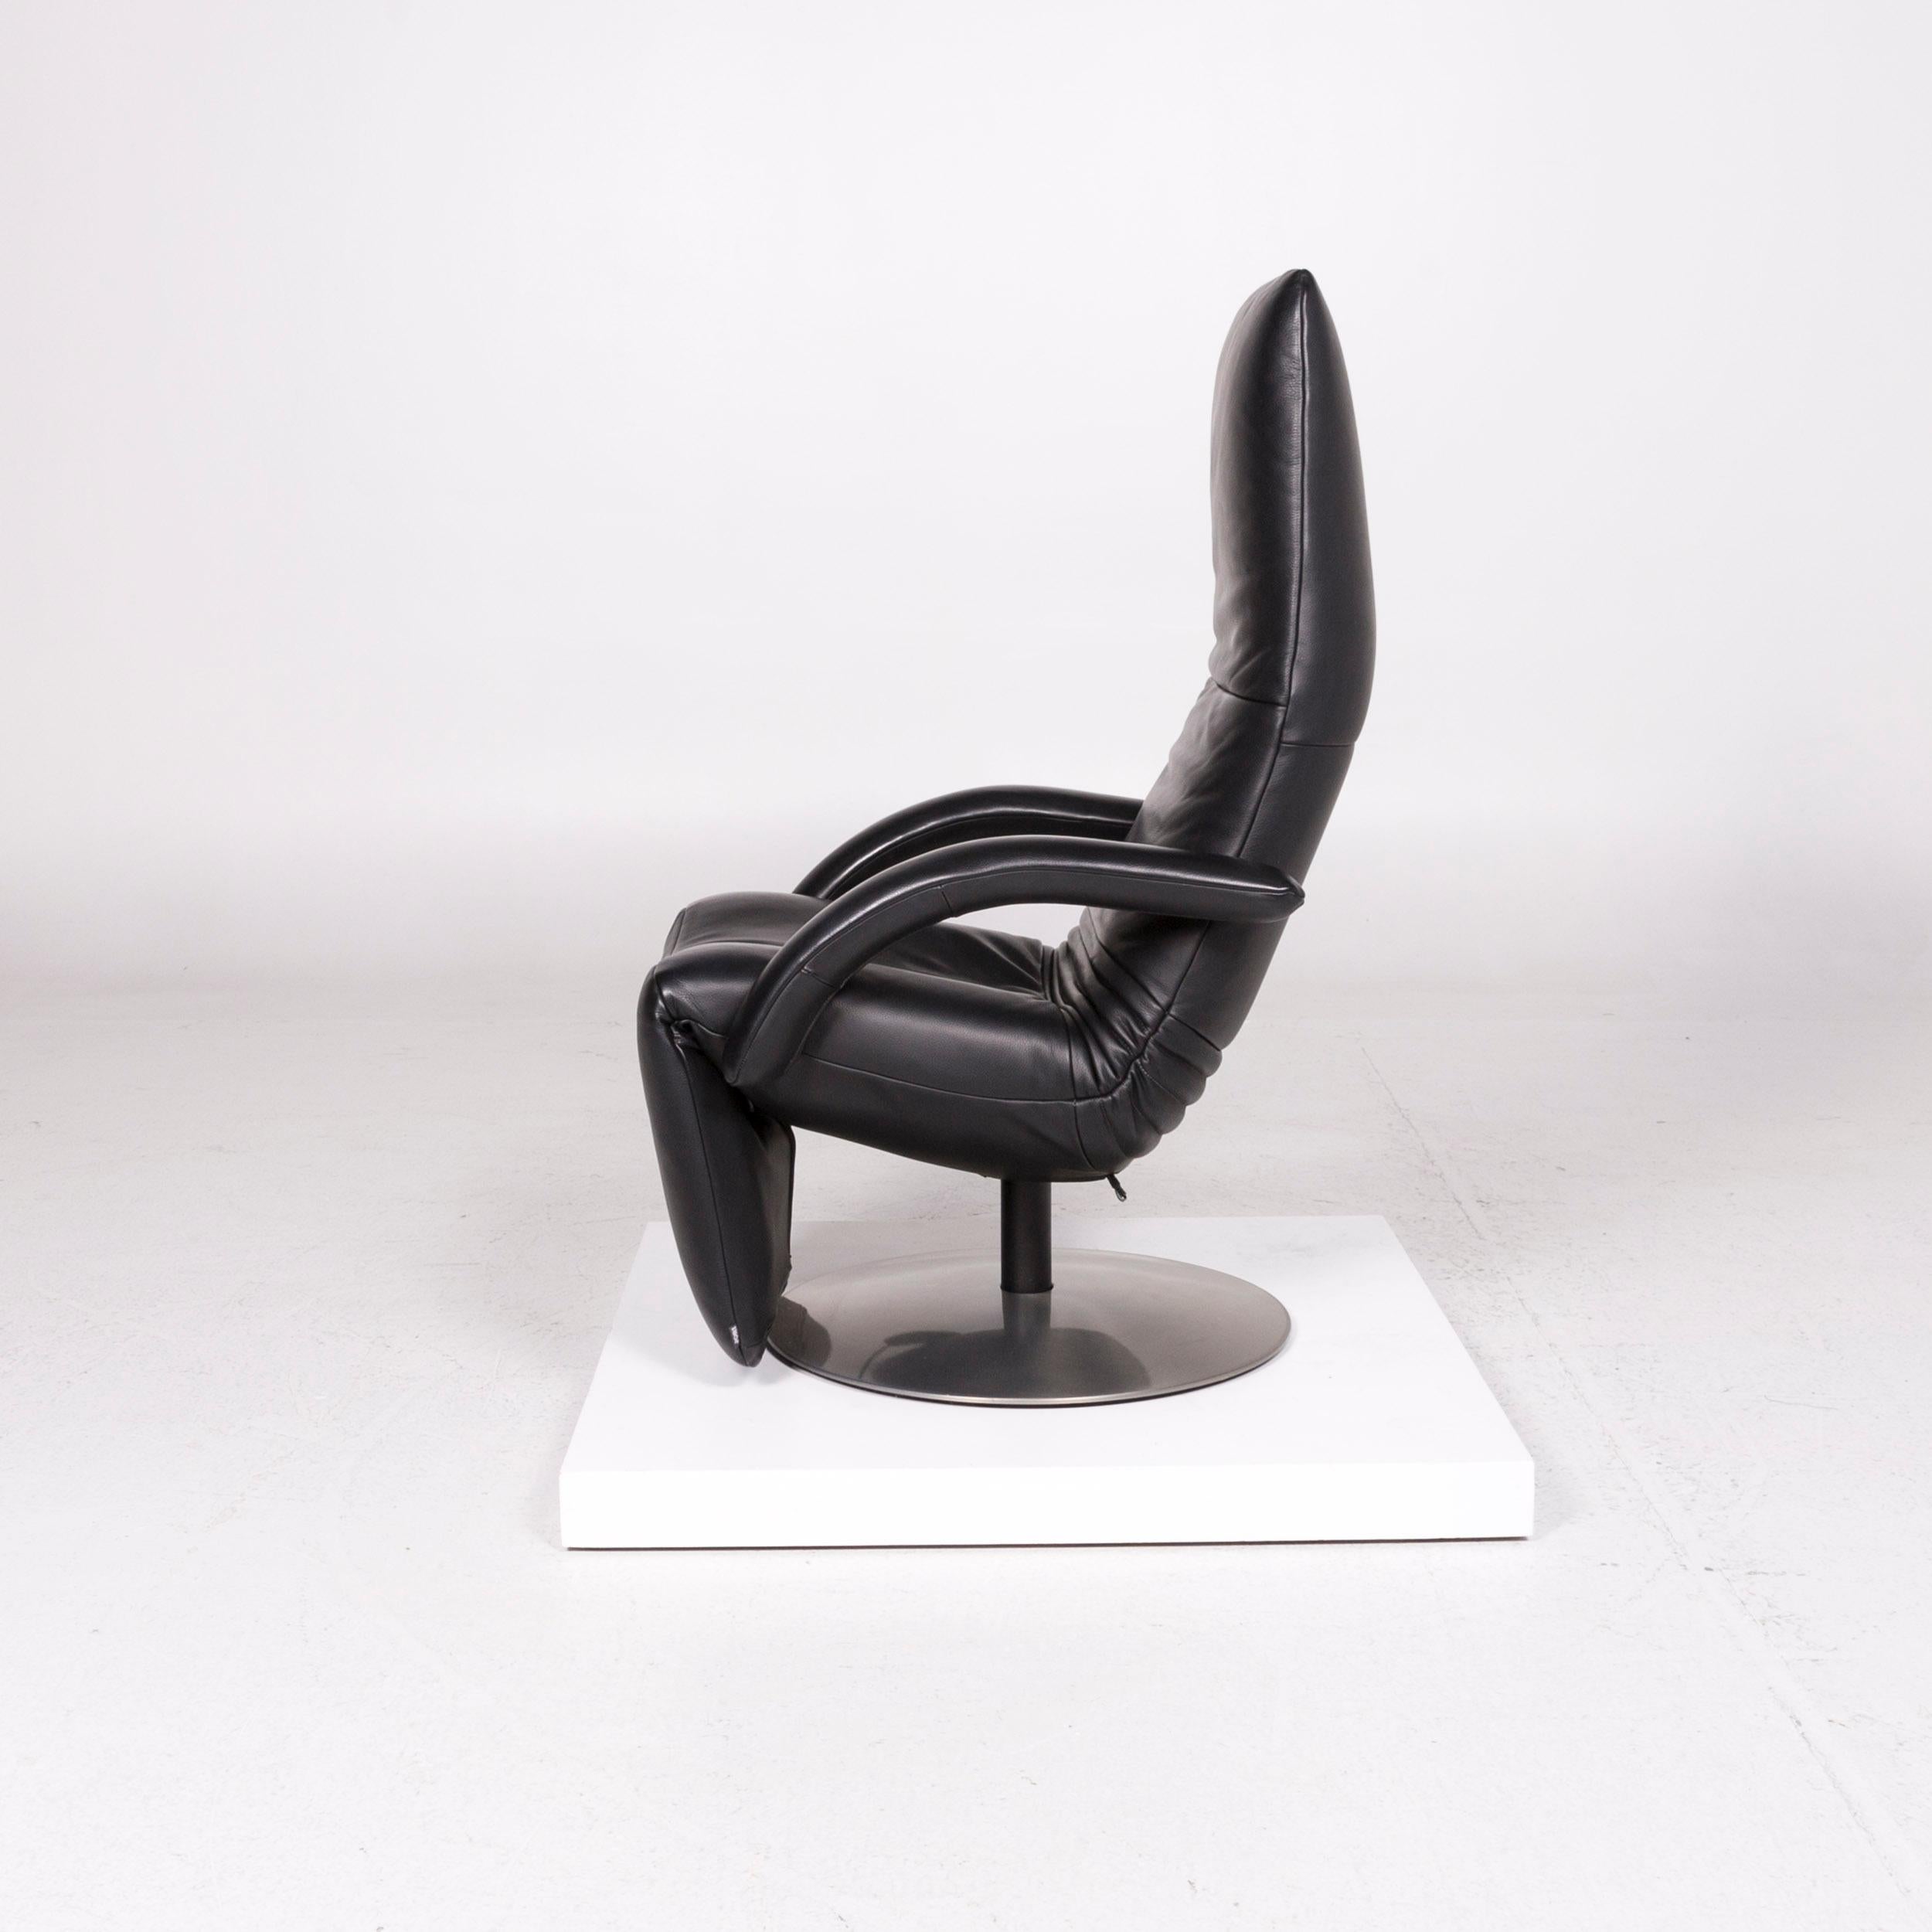 JORI Leather Armchair Black Relax Function Massage Function Massage Chair 5